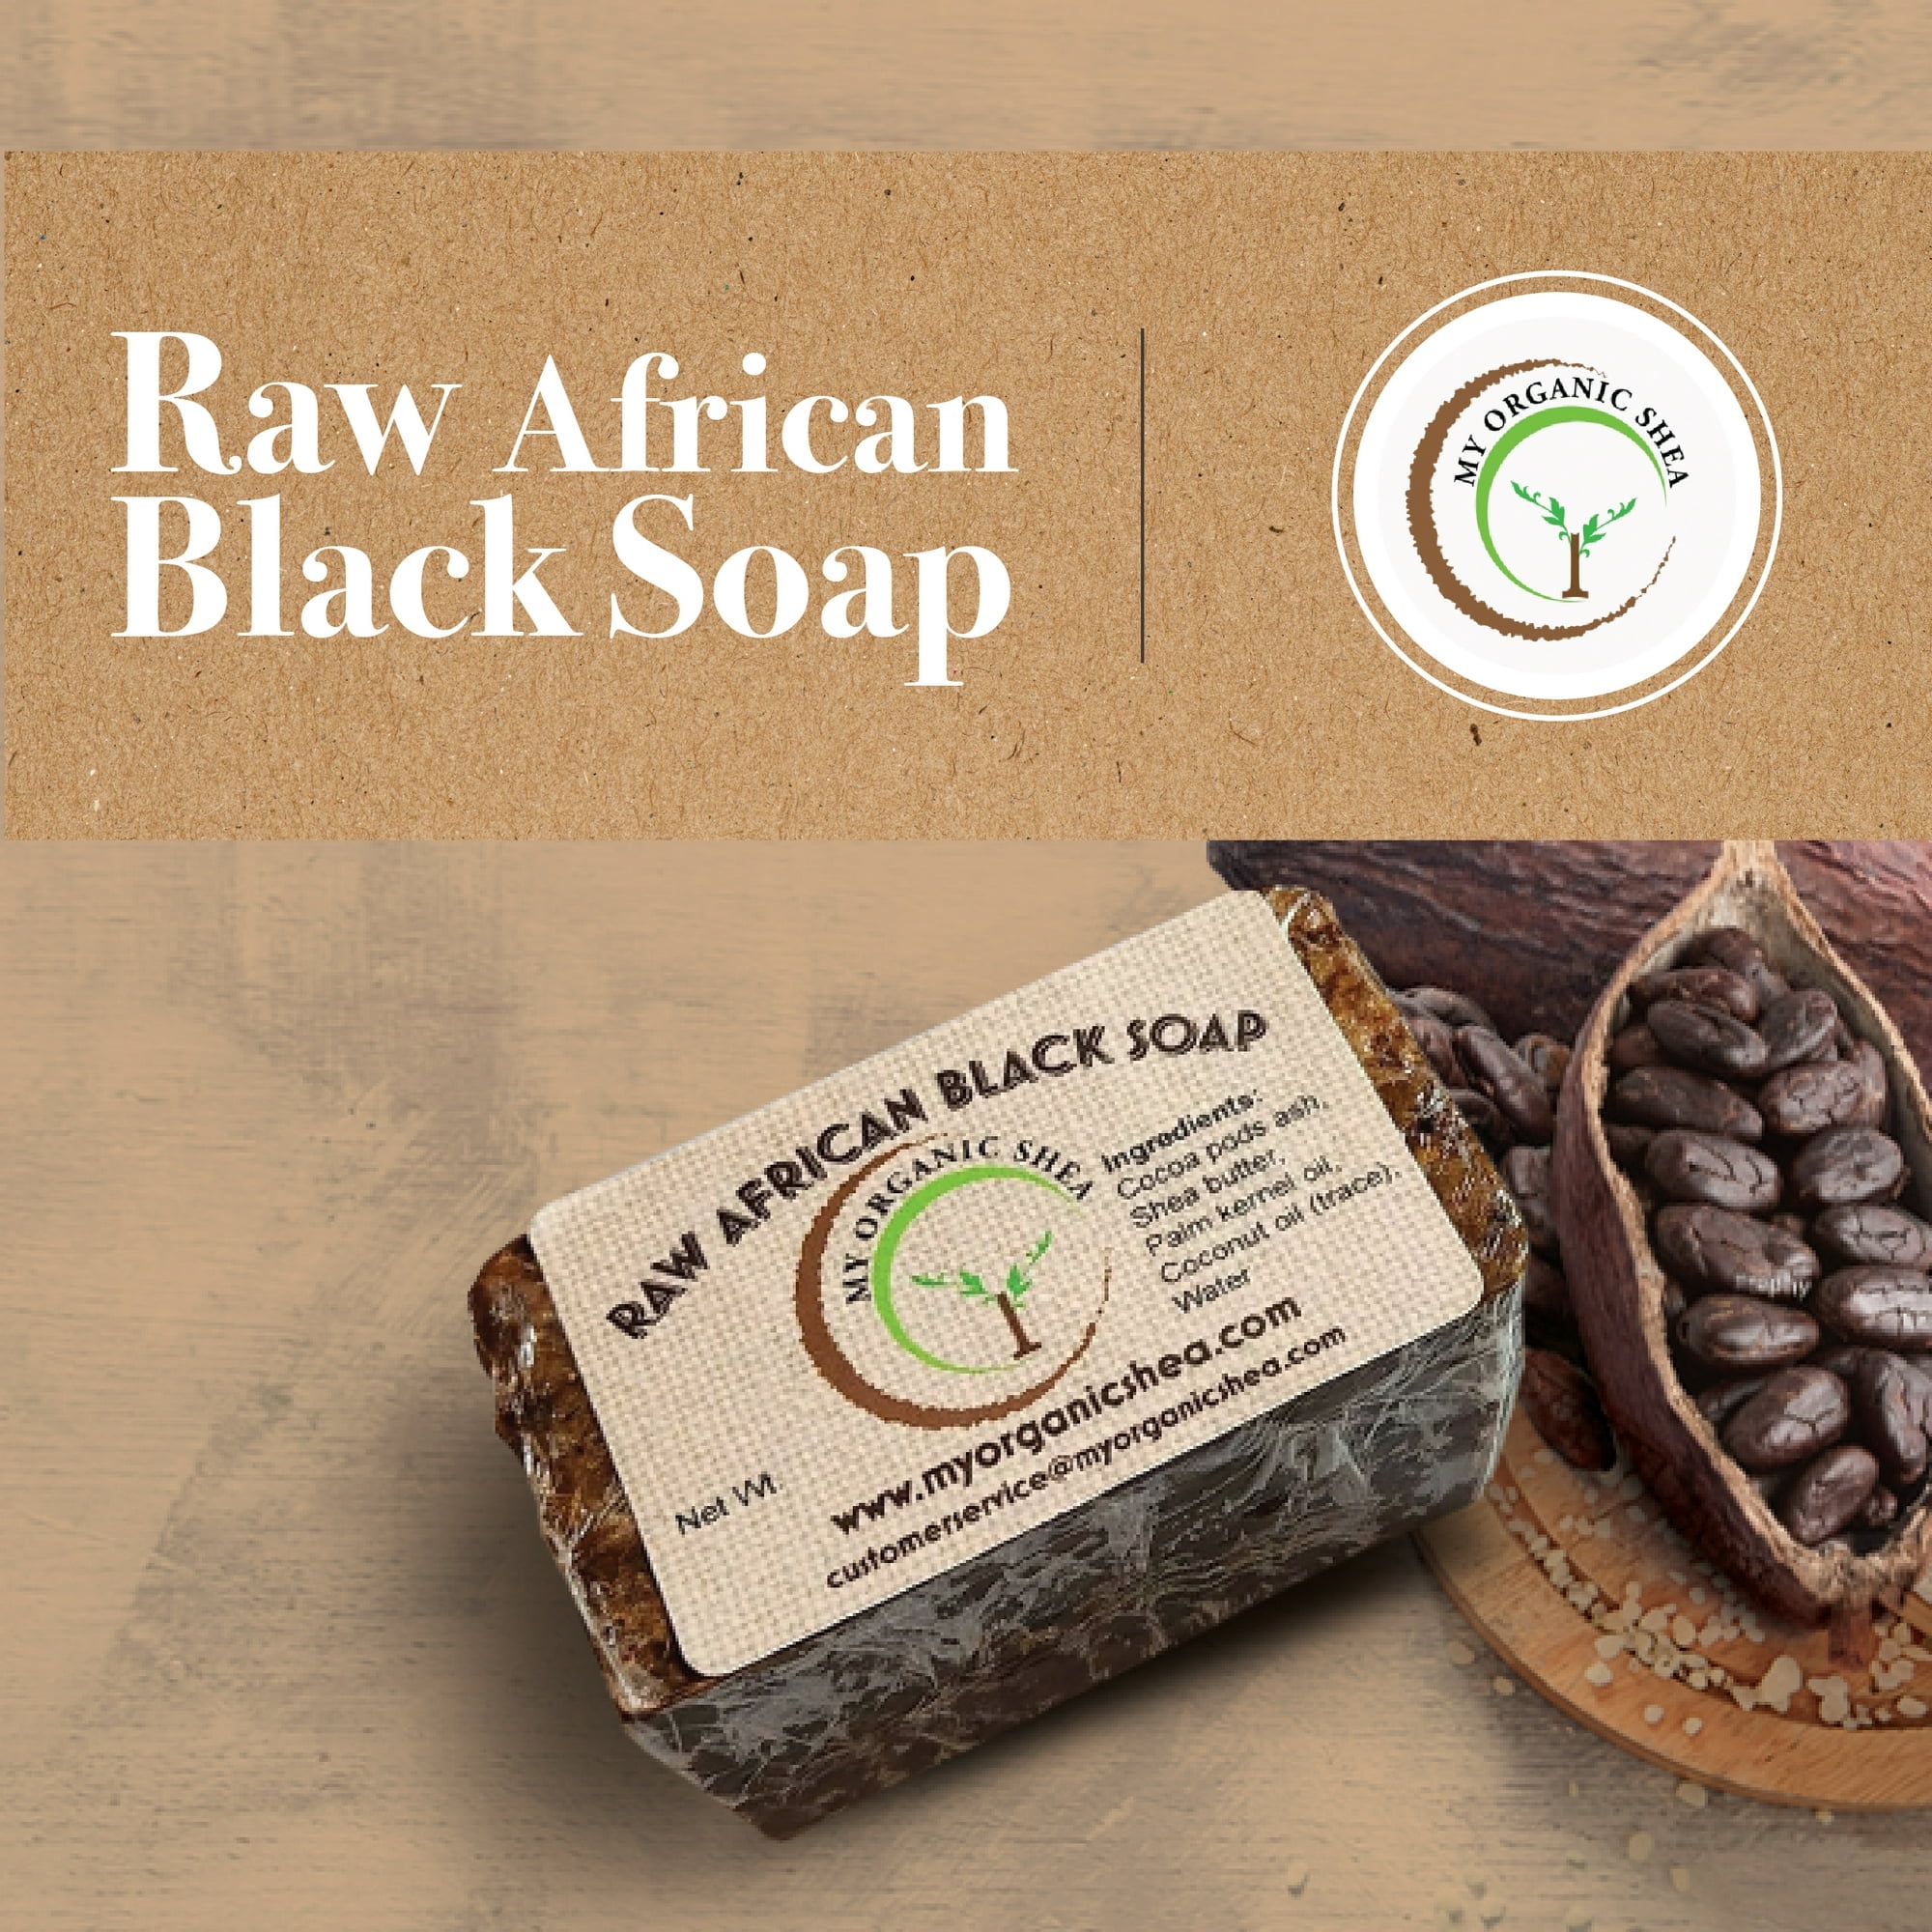 Raw Sugar Men Bar Soap, Black Coconut + Sea Salt - 2 pack, 5 oz bars